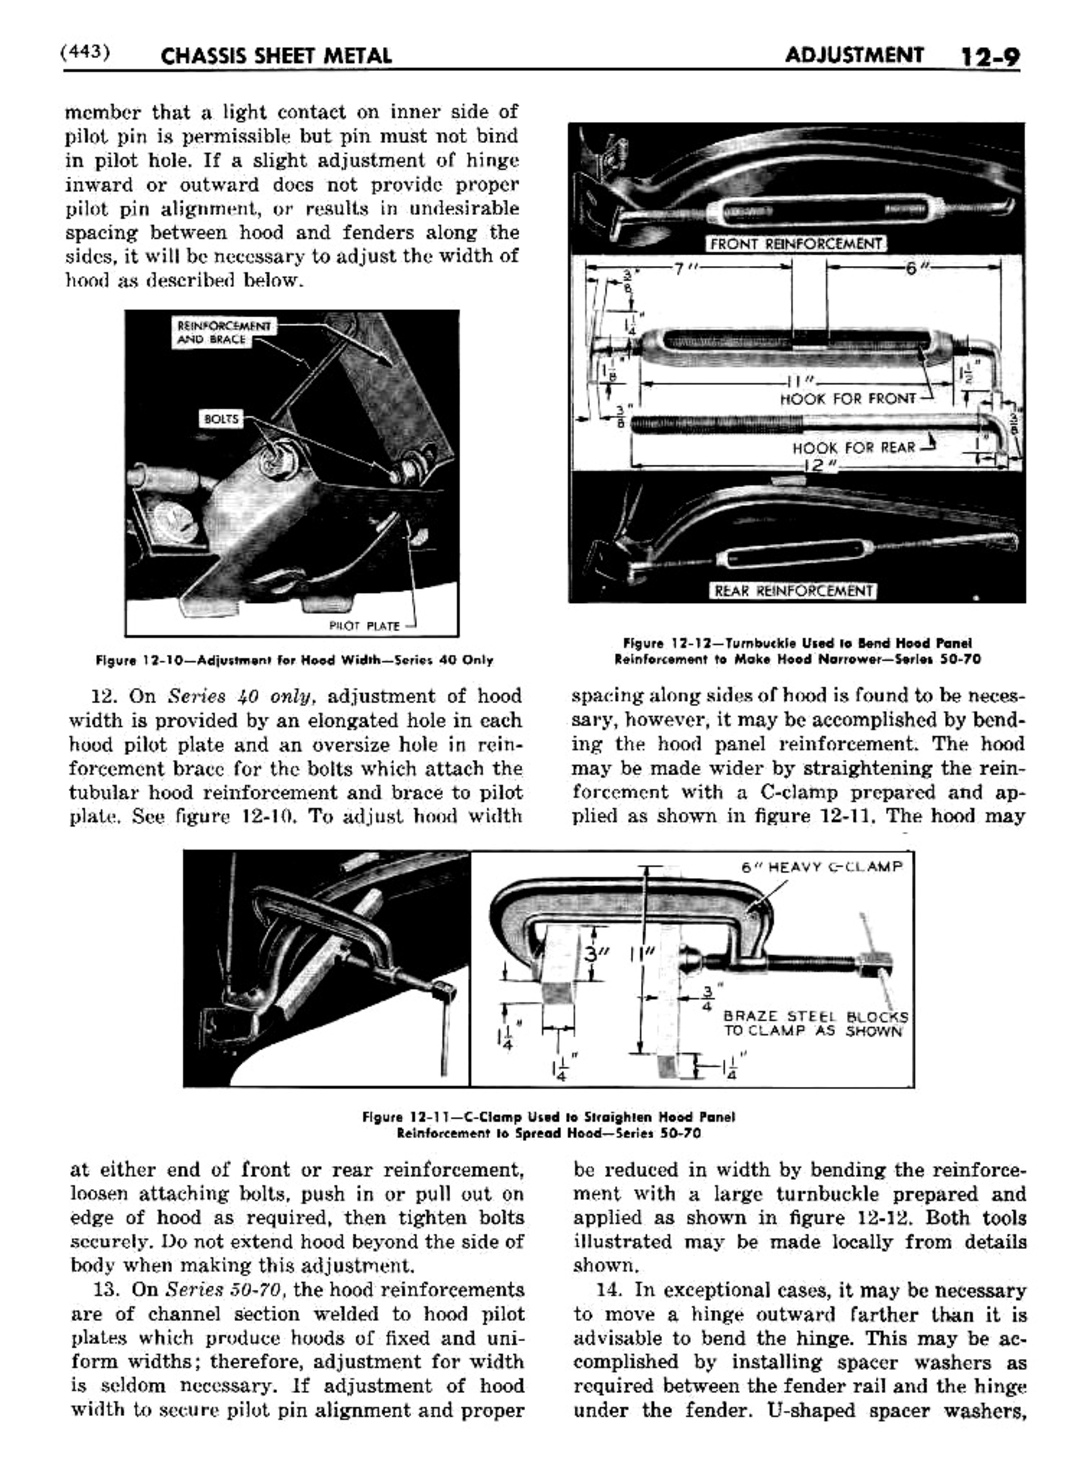 n_13 1948 Buick Shop Manual - Chassis Sheet Metal-009-009.jpg